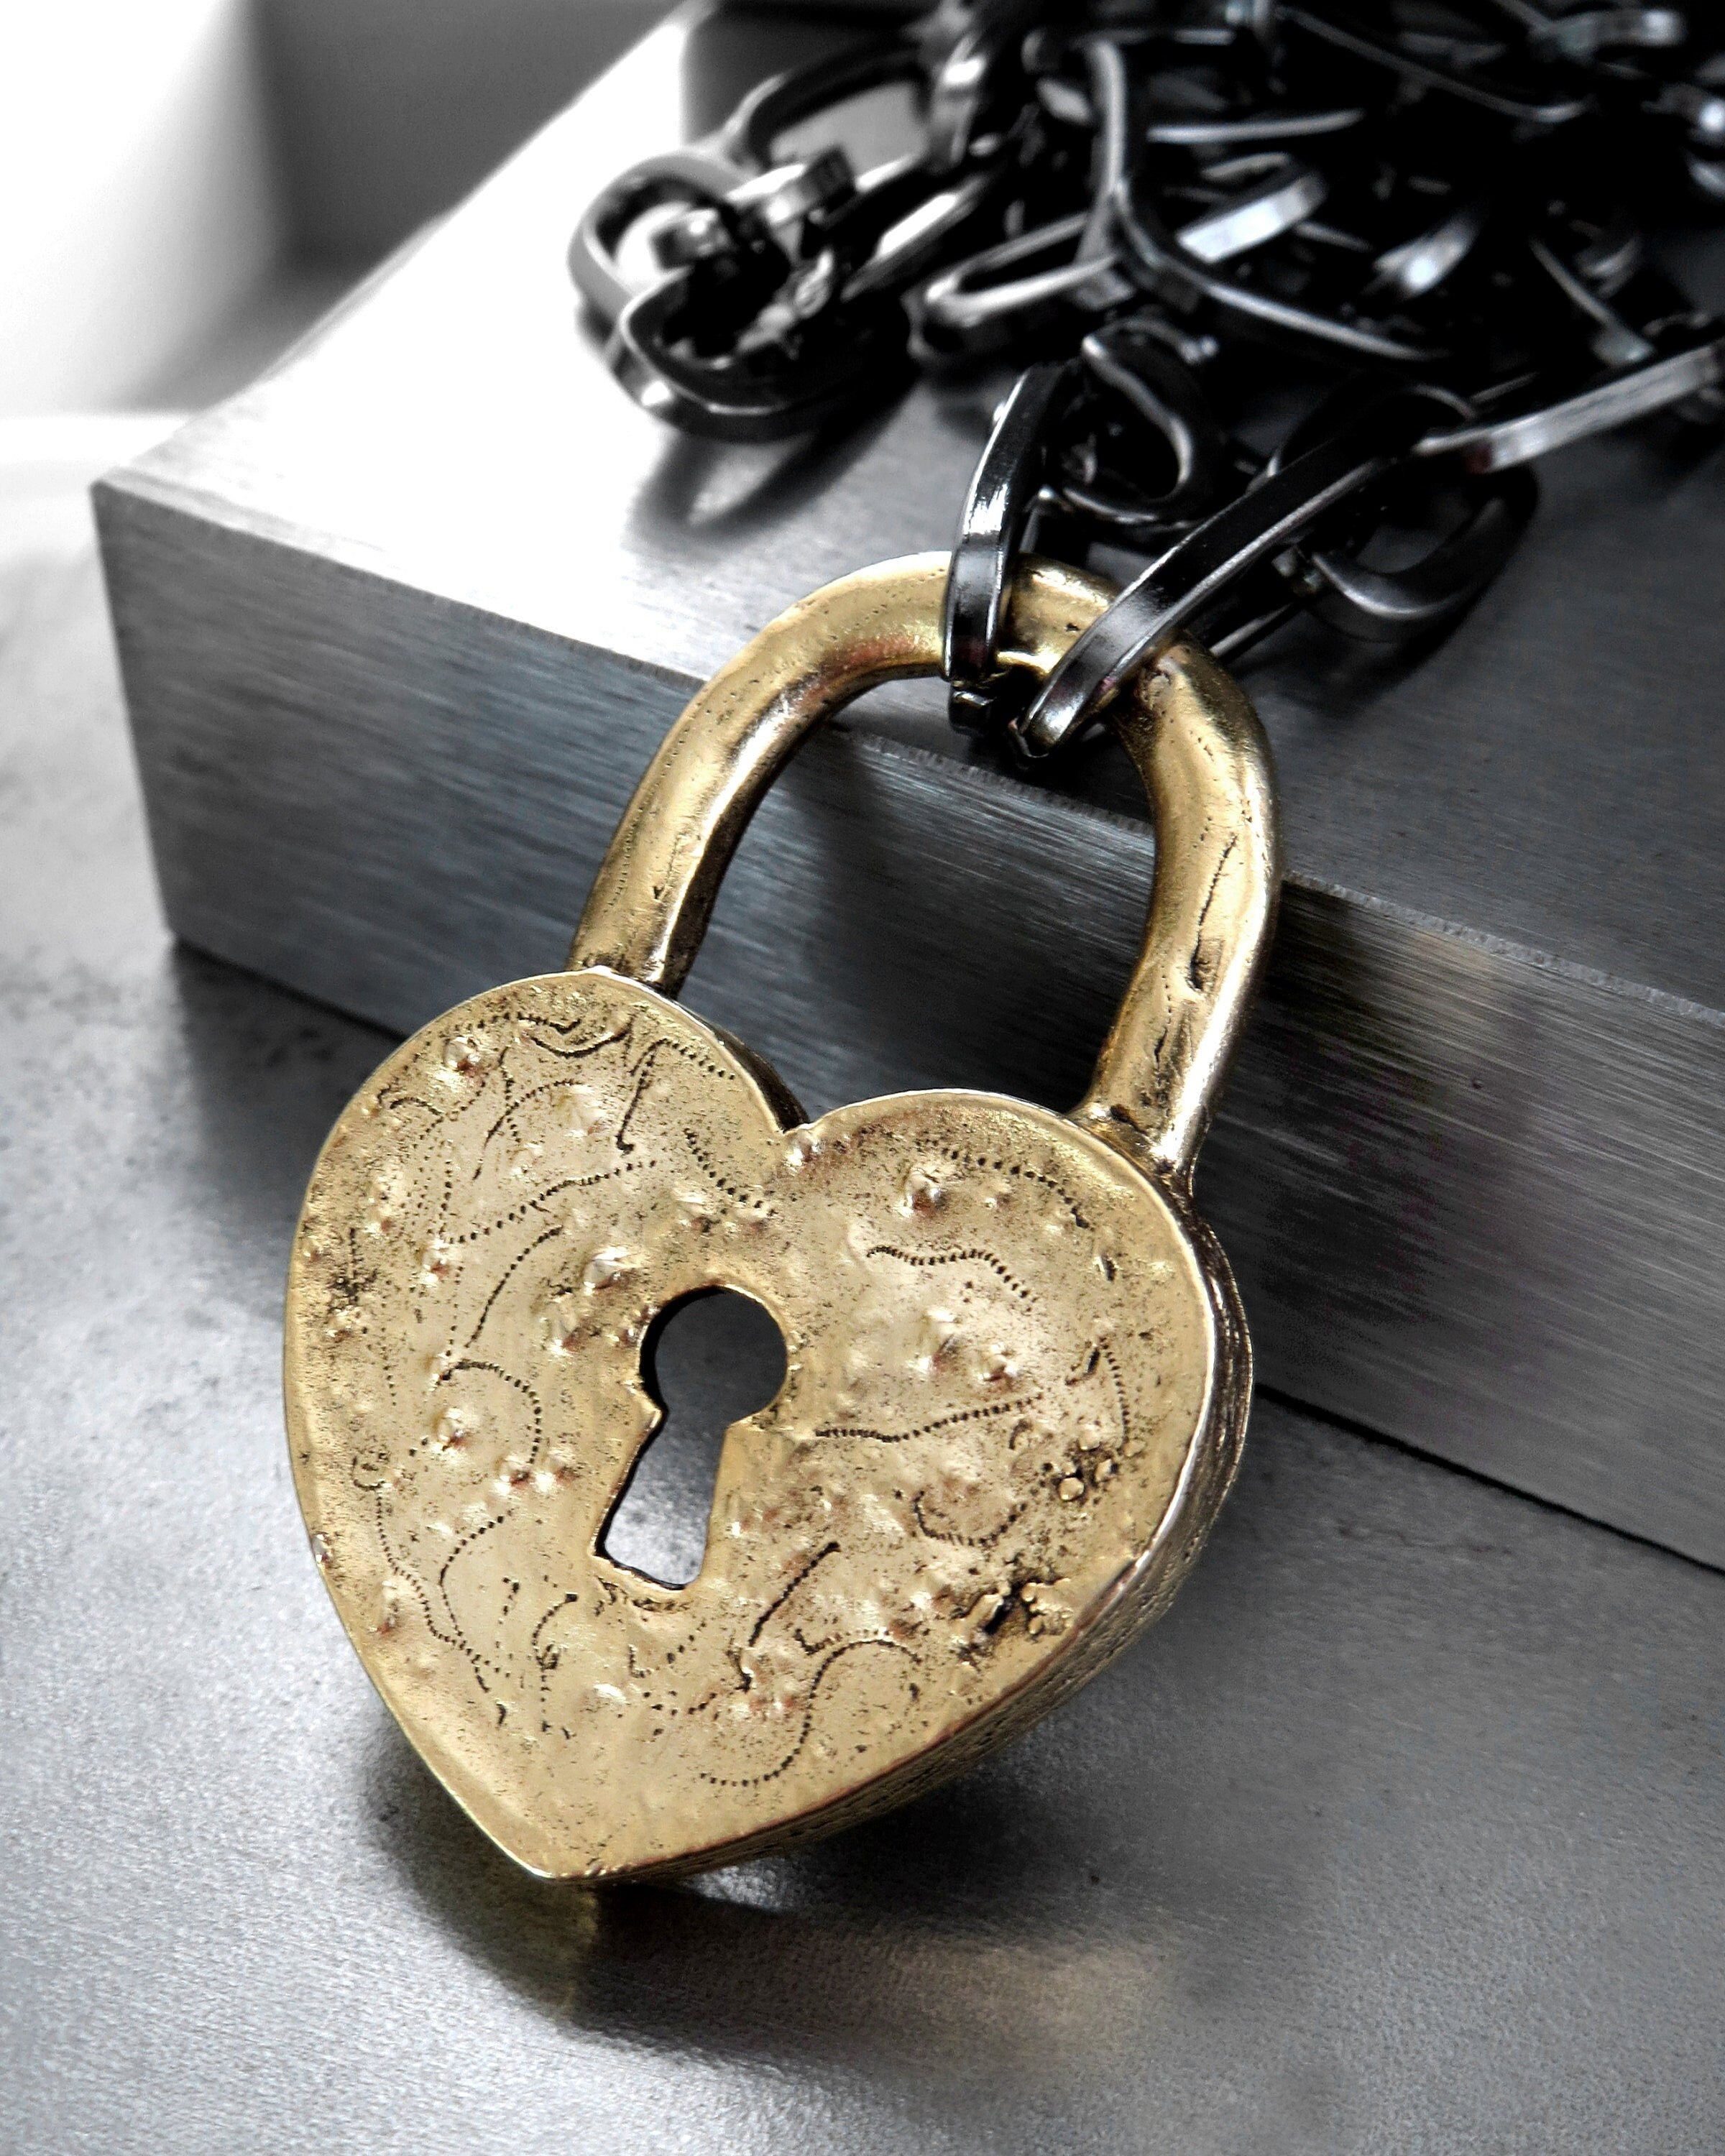 Locked Up Pendant Chain | Lock Necklace | Padlock Chain 16